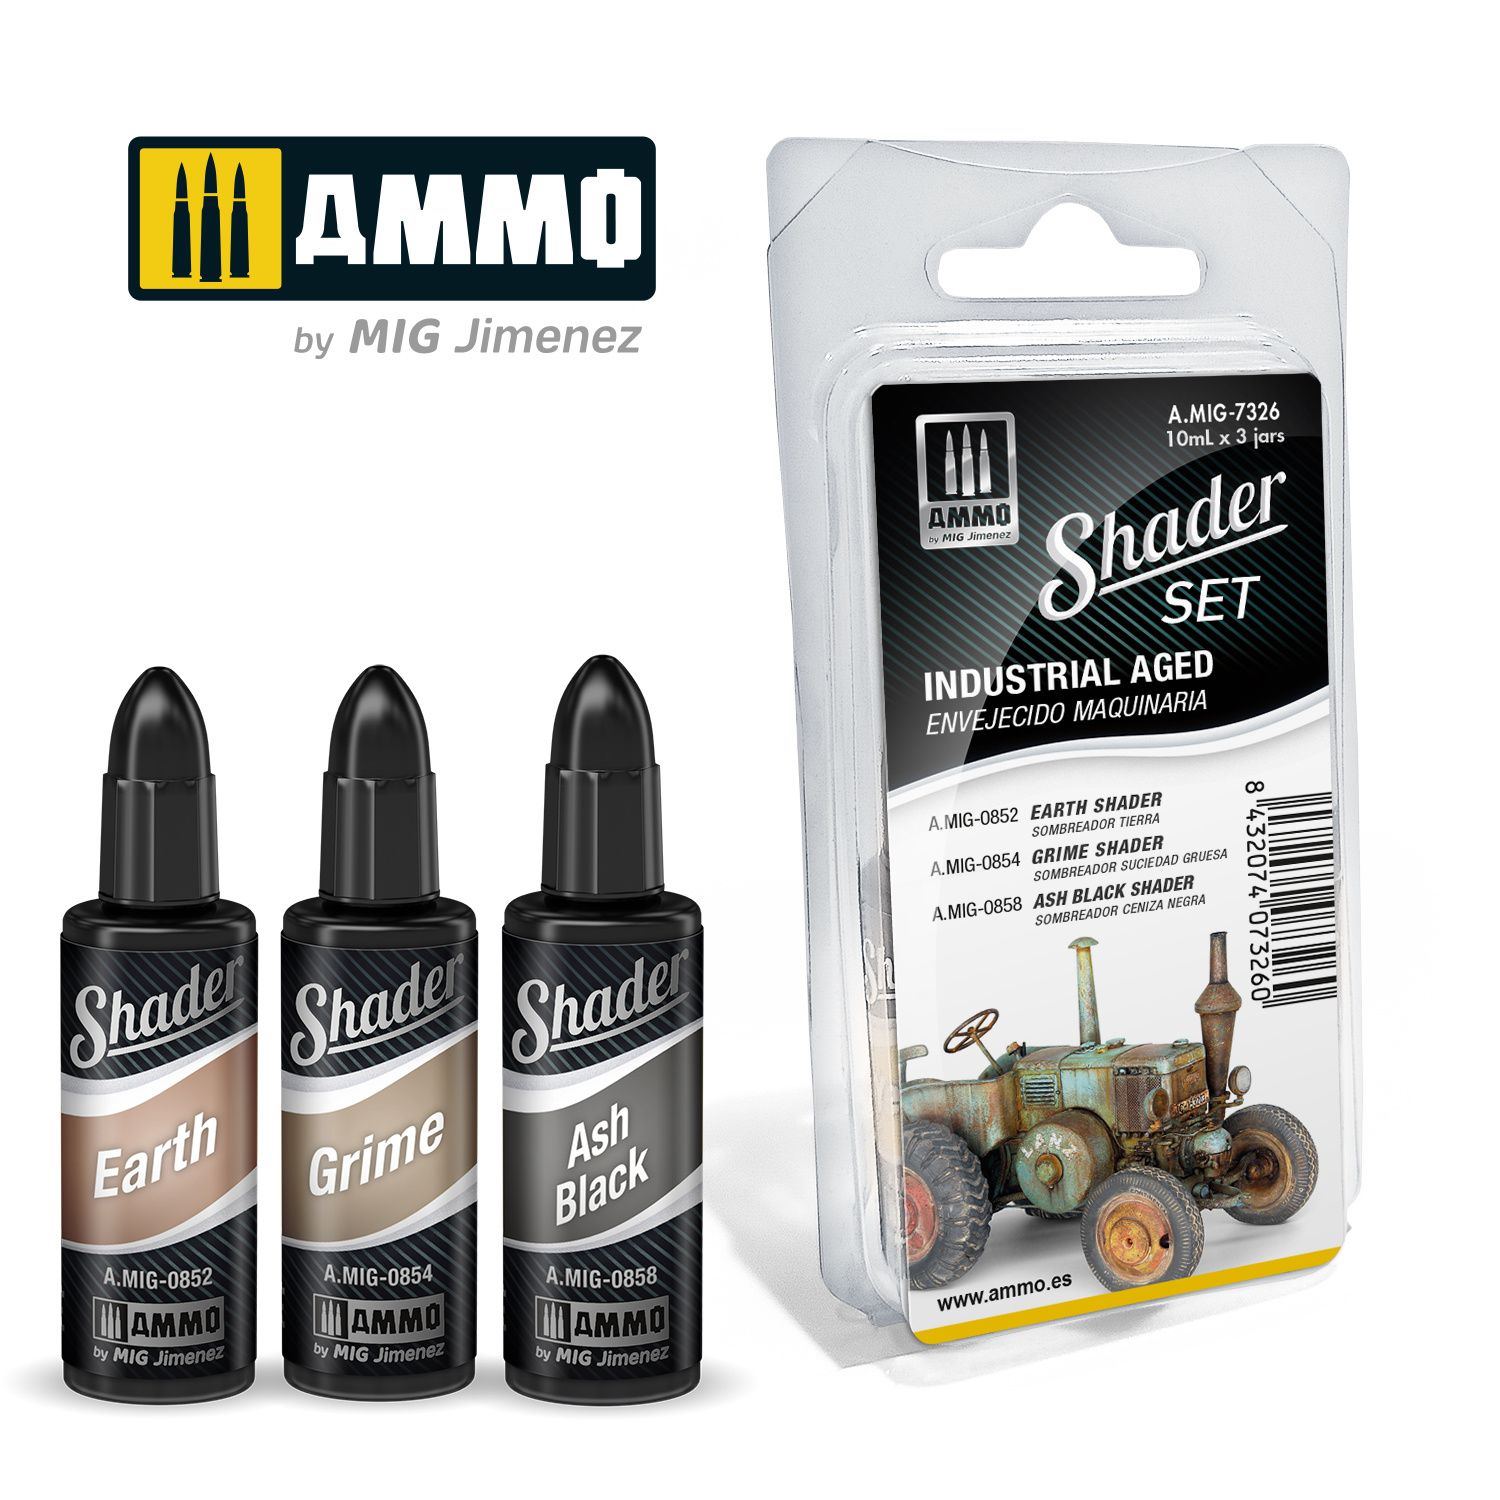 Ammo by Mig Jimenez Shader Set Industrial Aged - Ammo by Mig Jimenez - A.MIG-7326